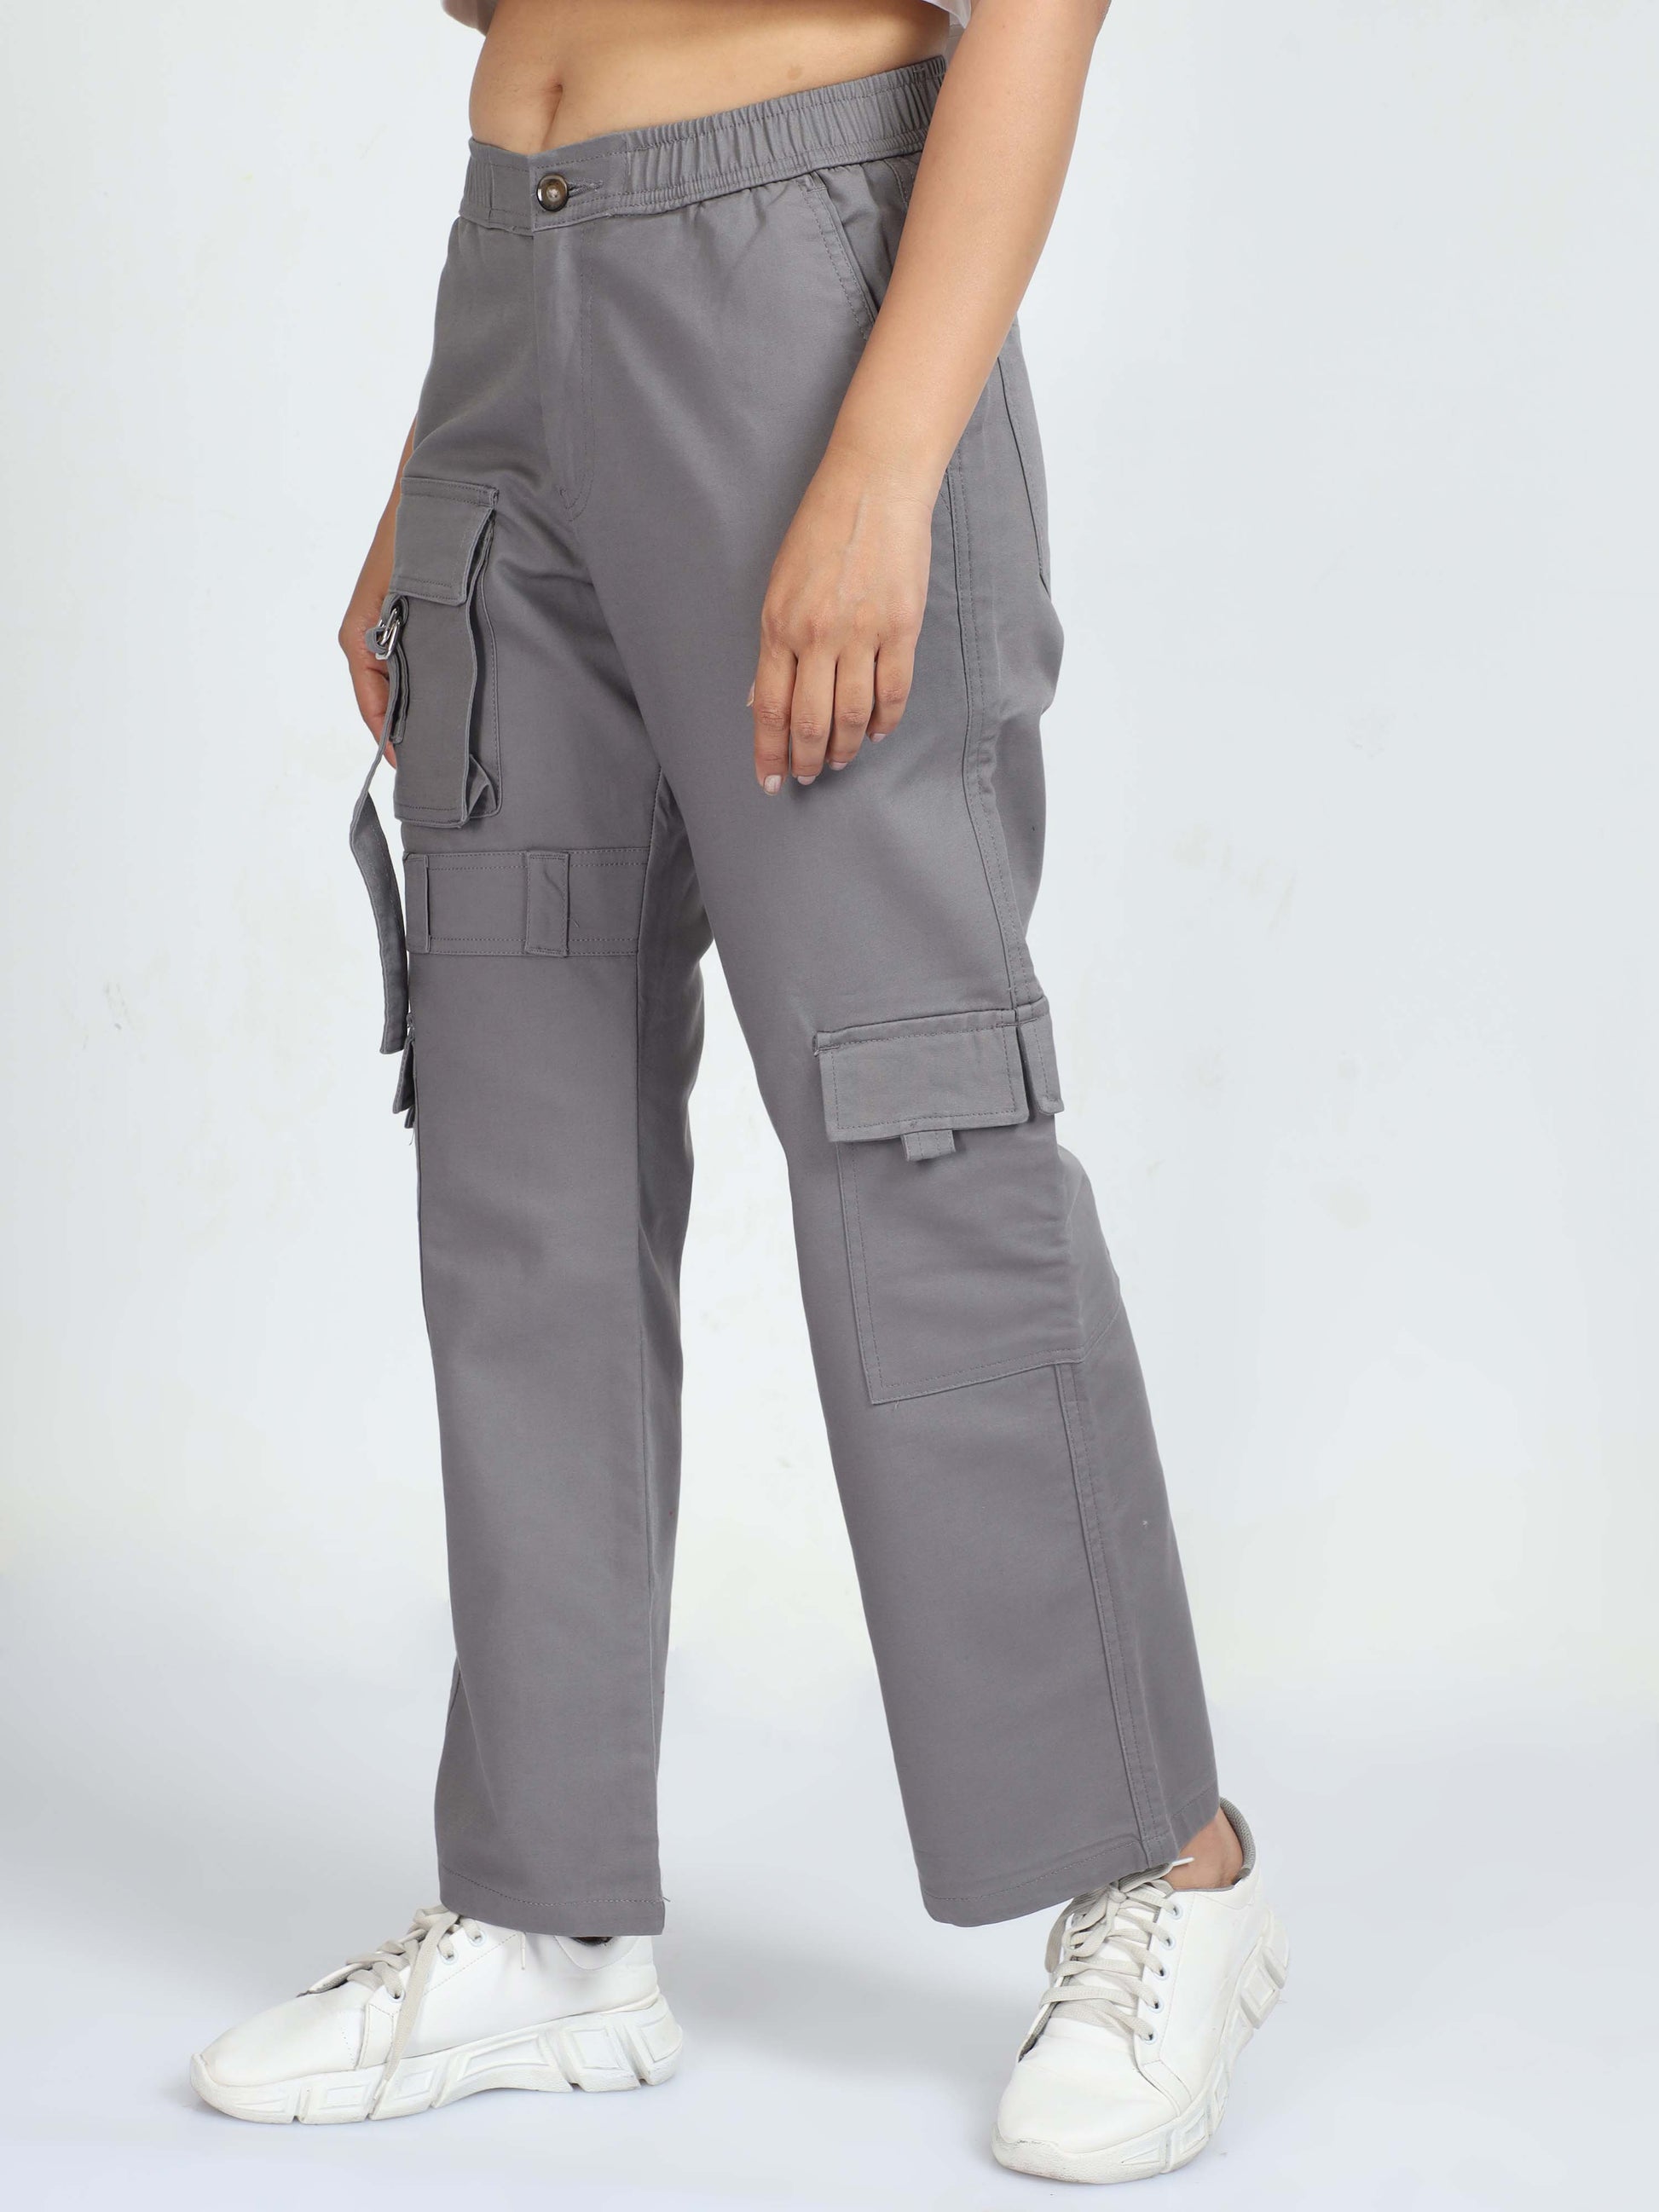 Buy Women's Grey Power Stretch Trouser Online in India